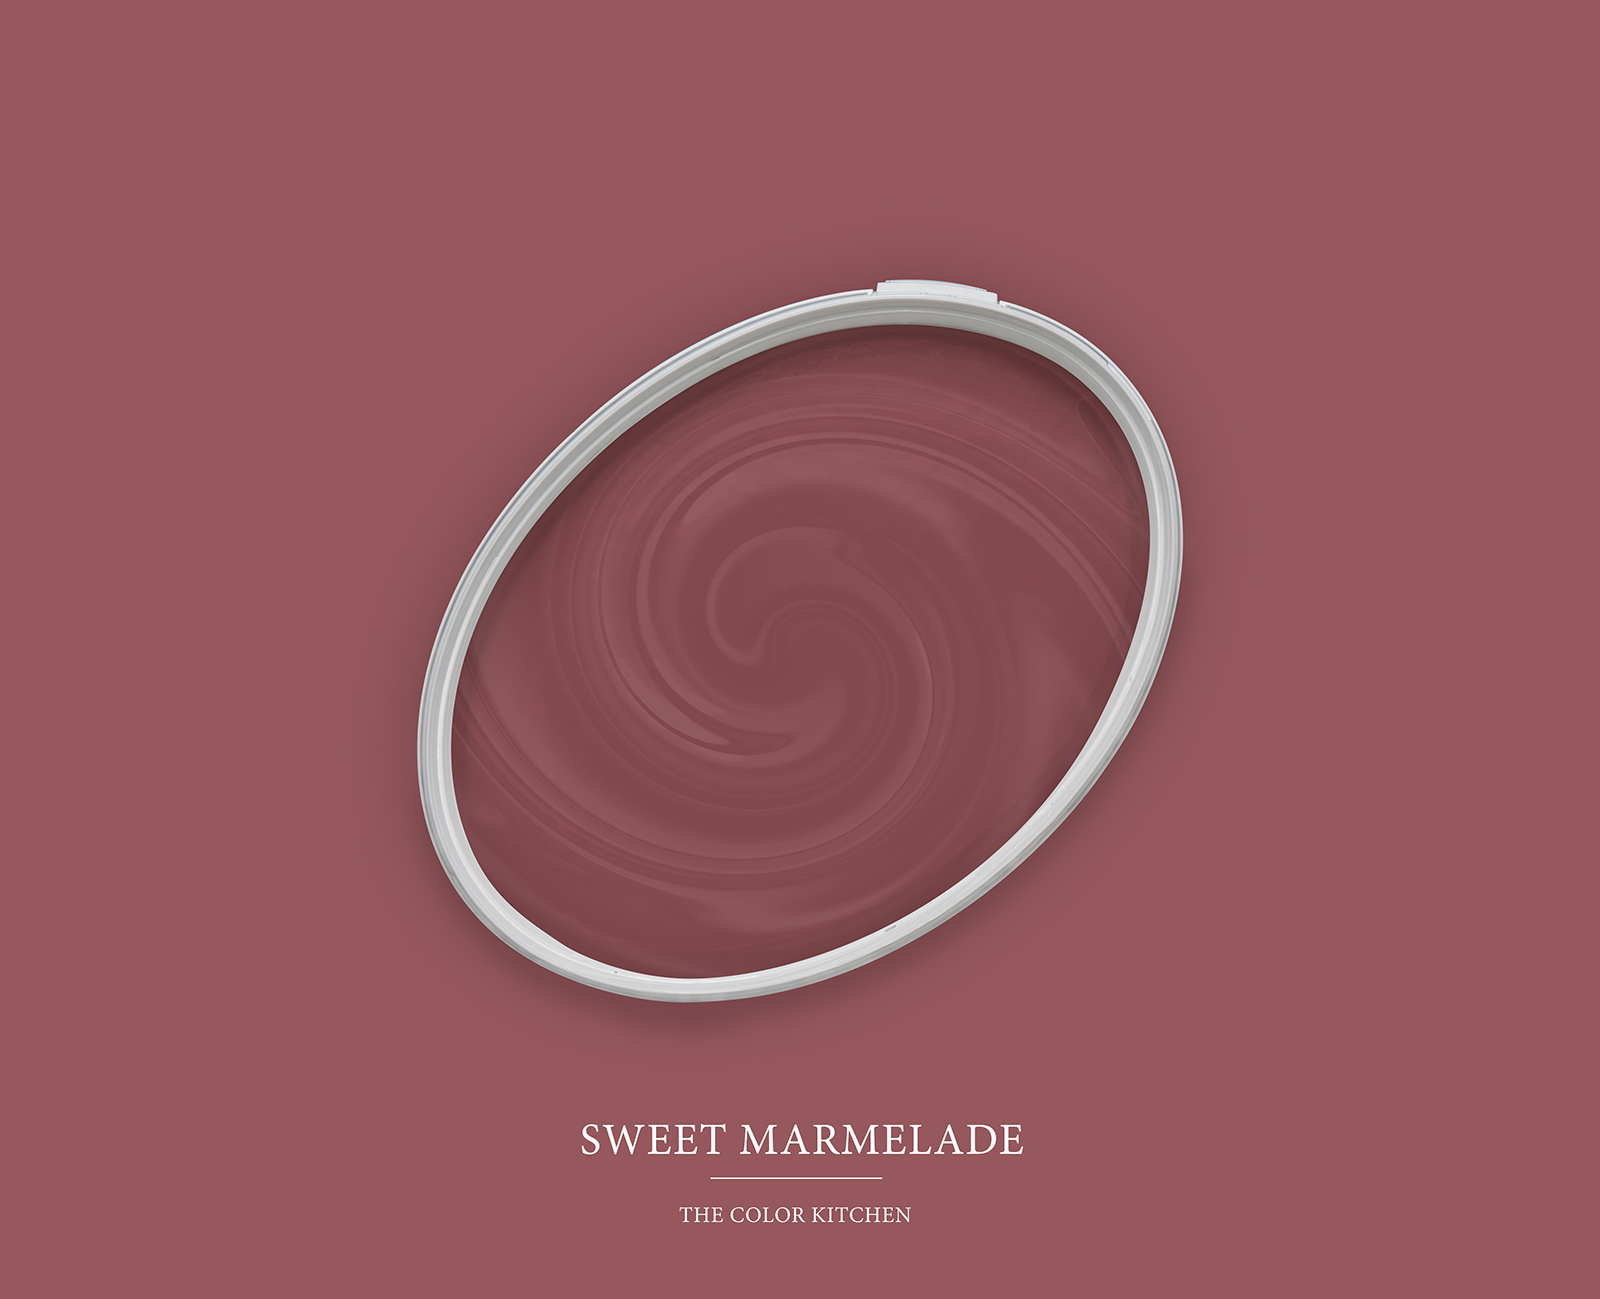         Wandfarbe in authentischem Beerenton »Sweet Marmelade« TCK7012 – 2,5 Liter
    